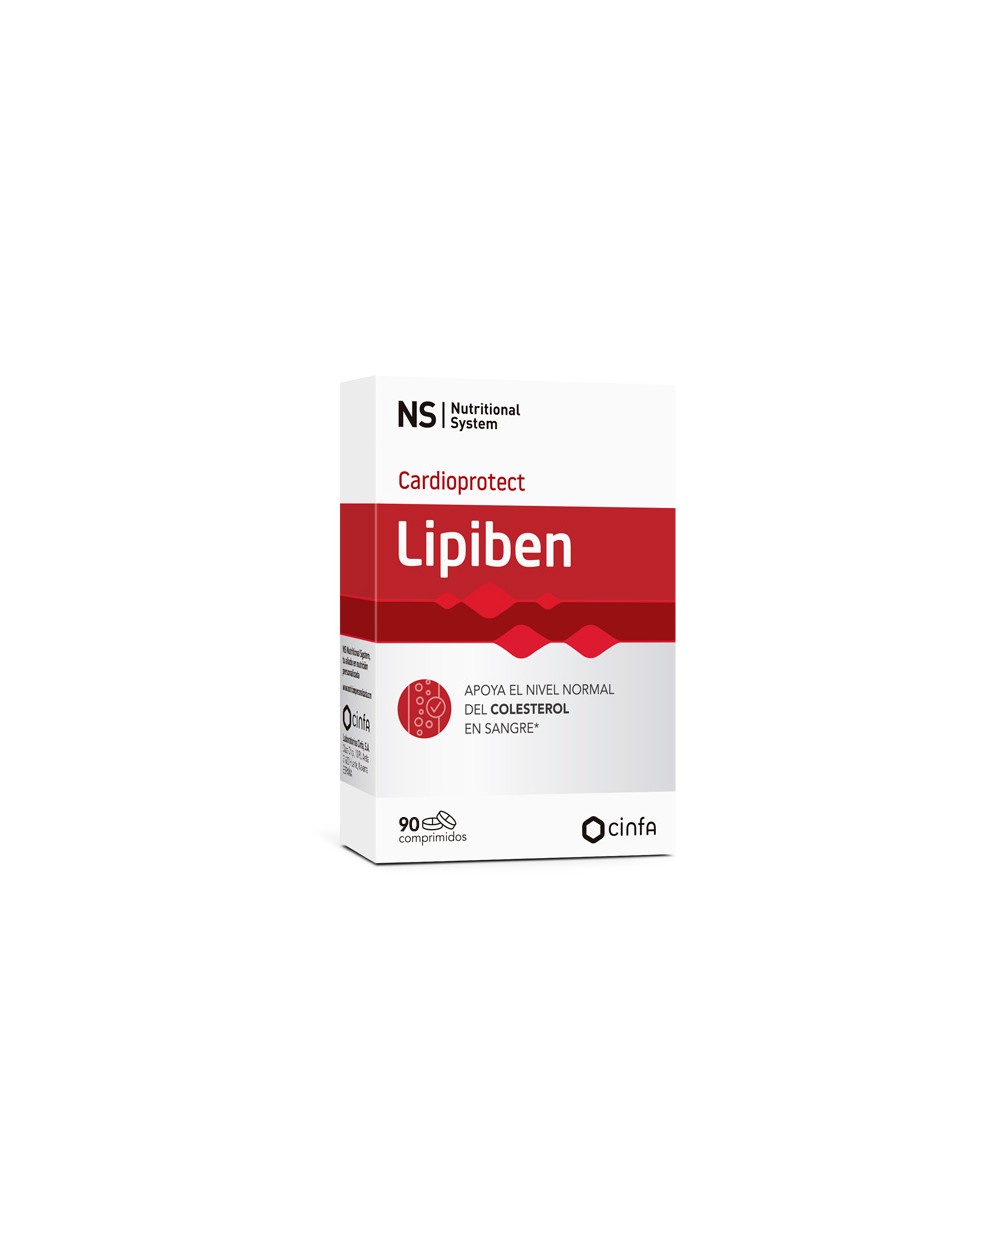 Ns Cardioprotect Lipiben 90 comprimidos - ayuda a mantener unos niveles normales de coresterol